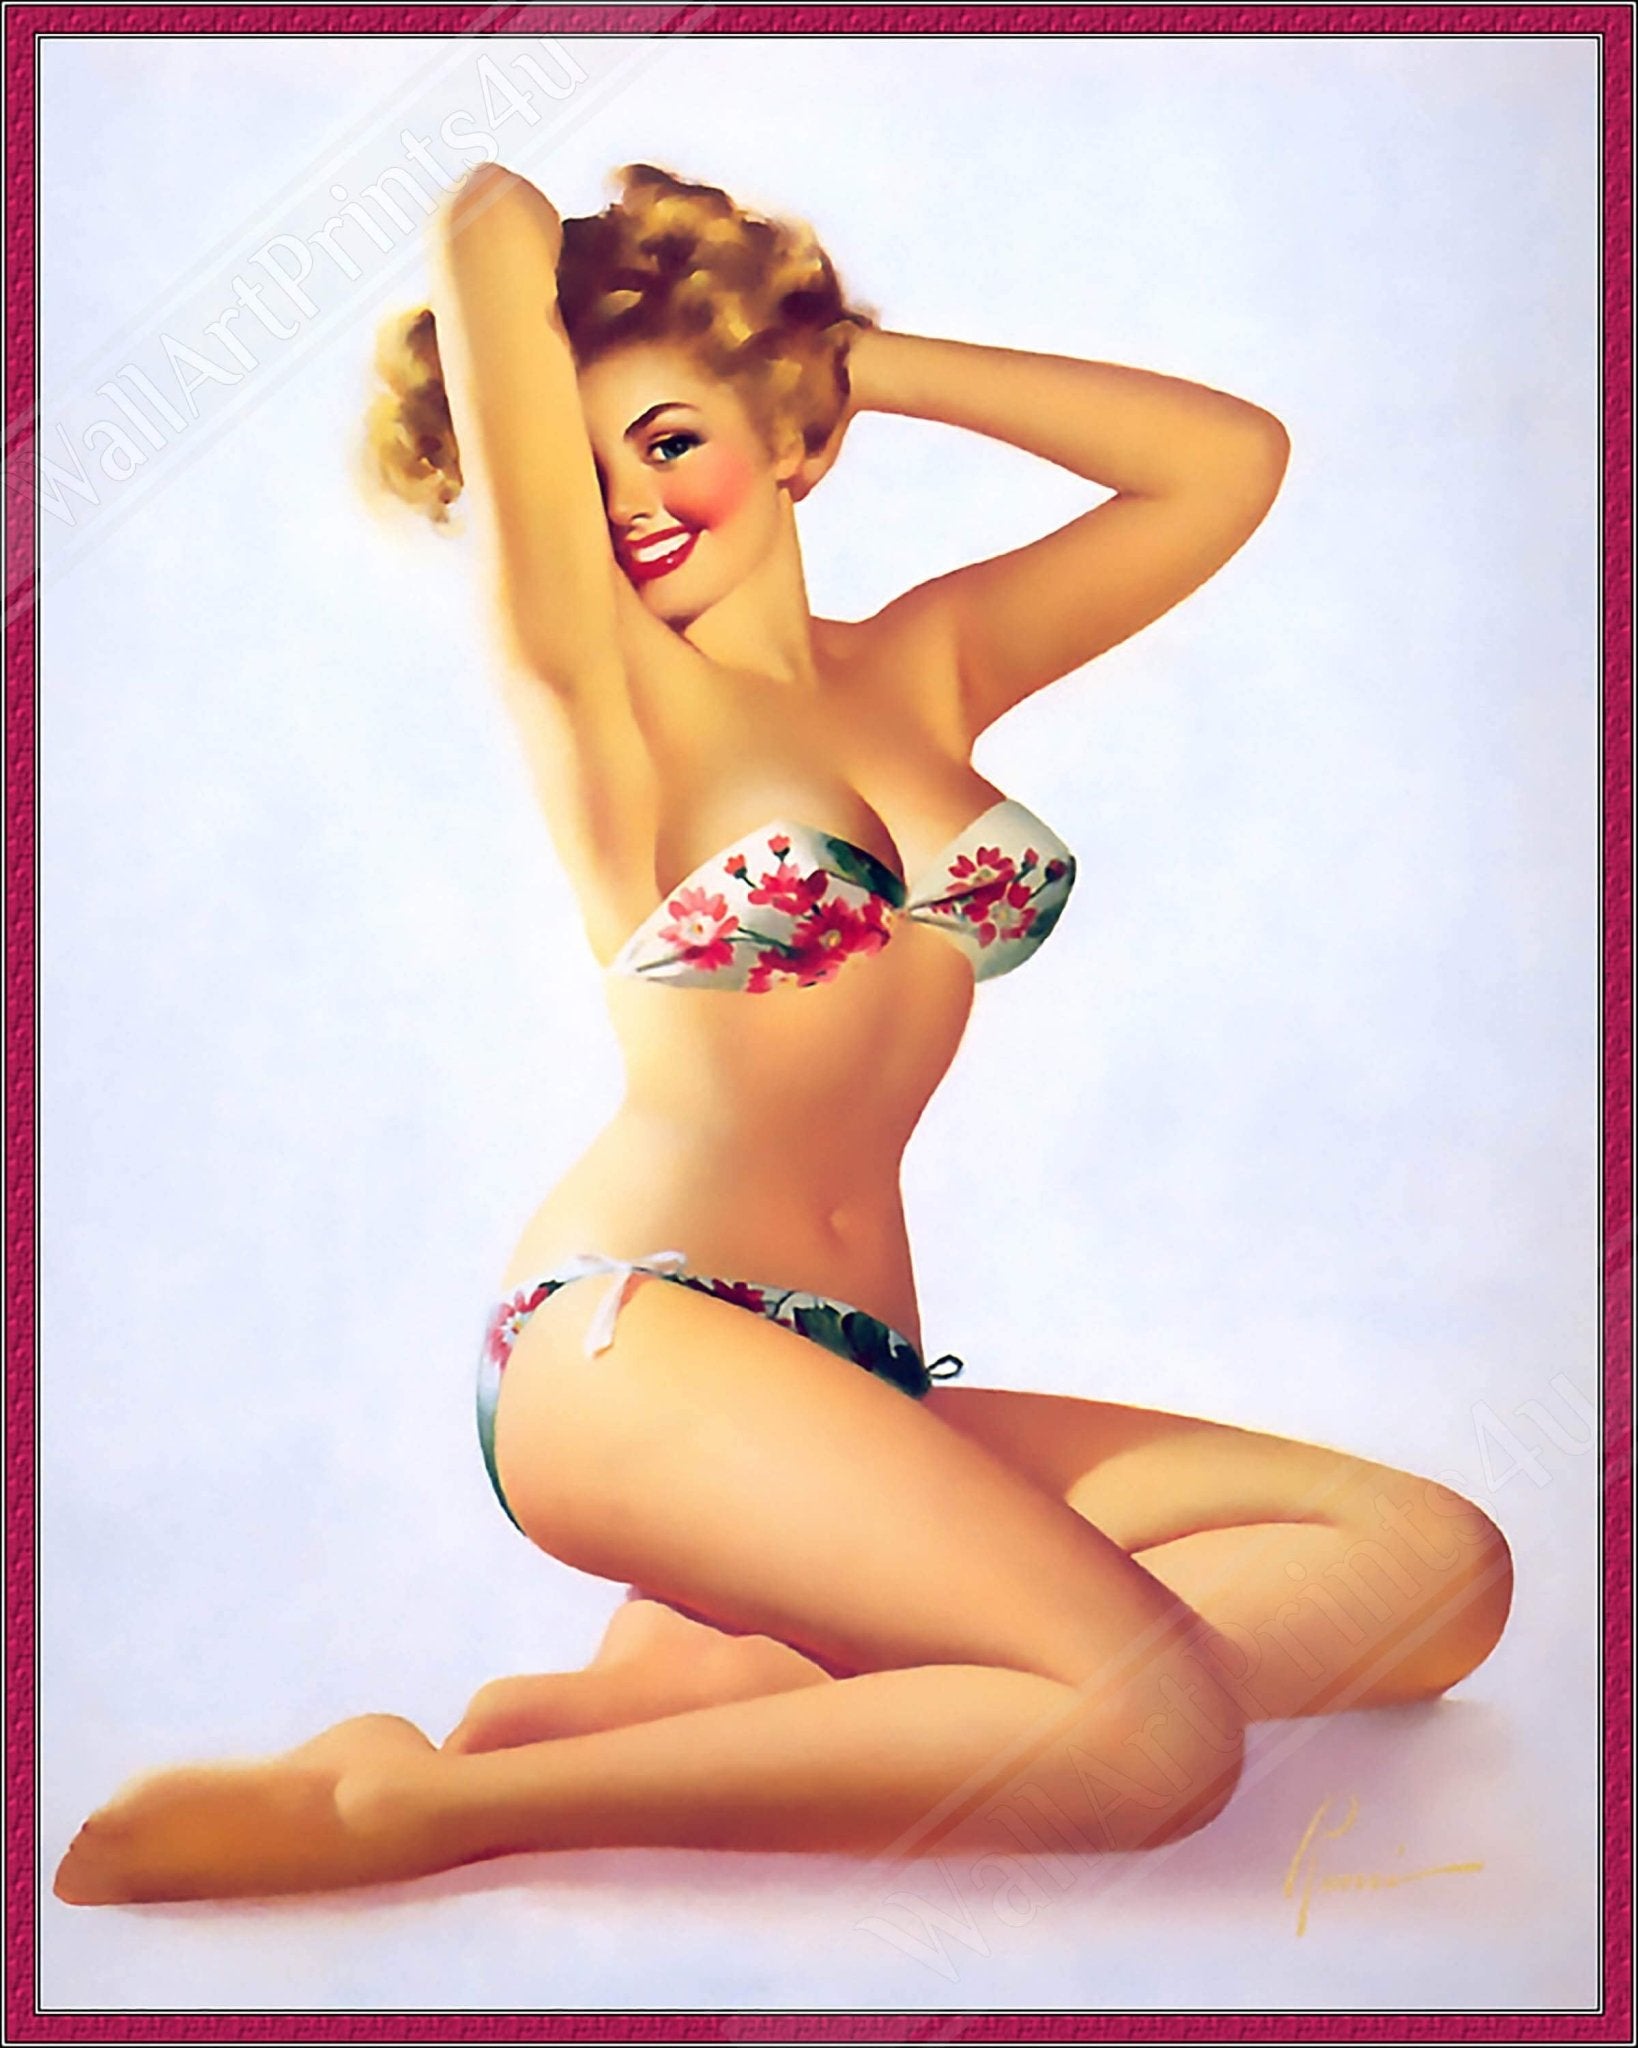 Vintage Pin Up Girl Poster, Red Flowers On Bikini - Edward Runci - Vintage Art - Retro Pin Up Girl Print - Late 1940'S - 1950'S - WallArtPrints4U